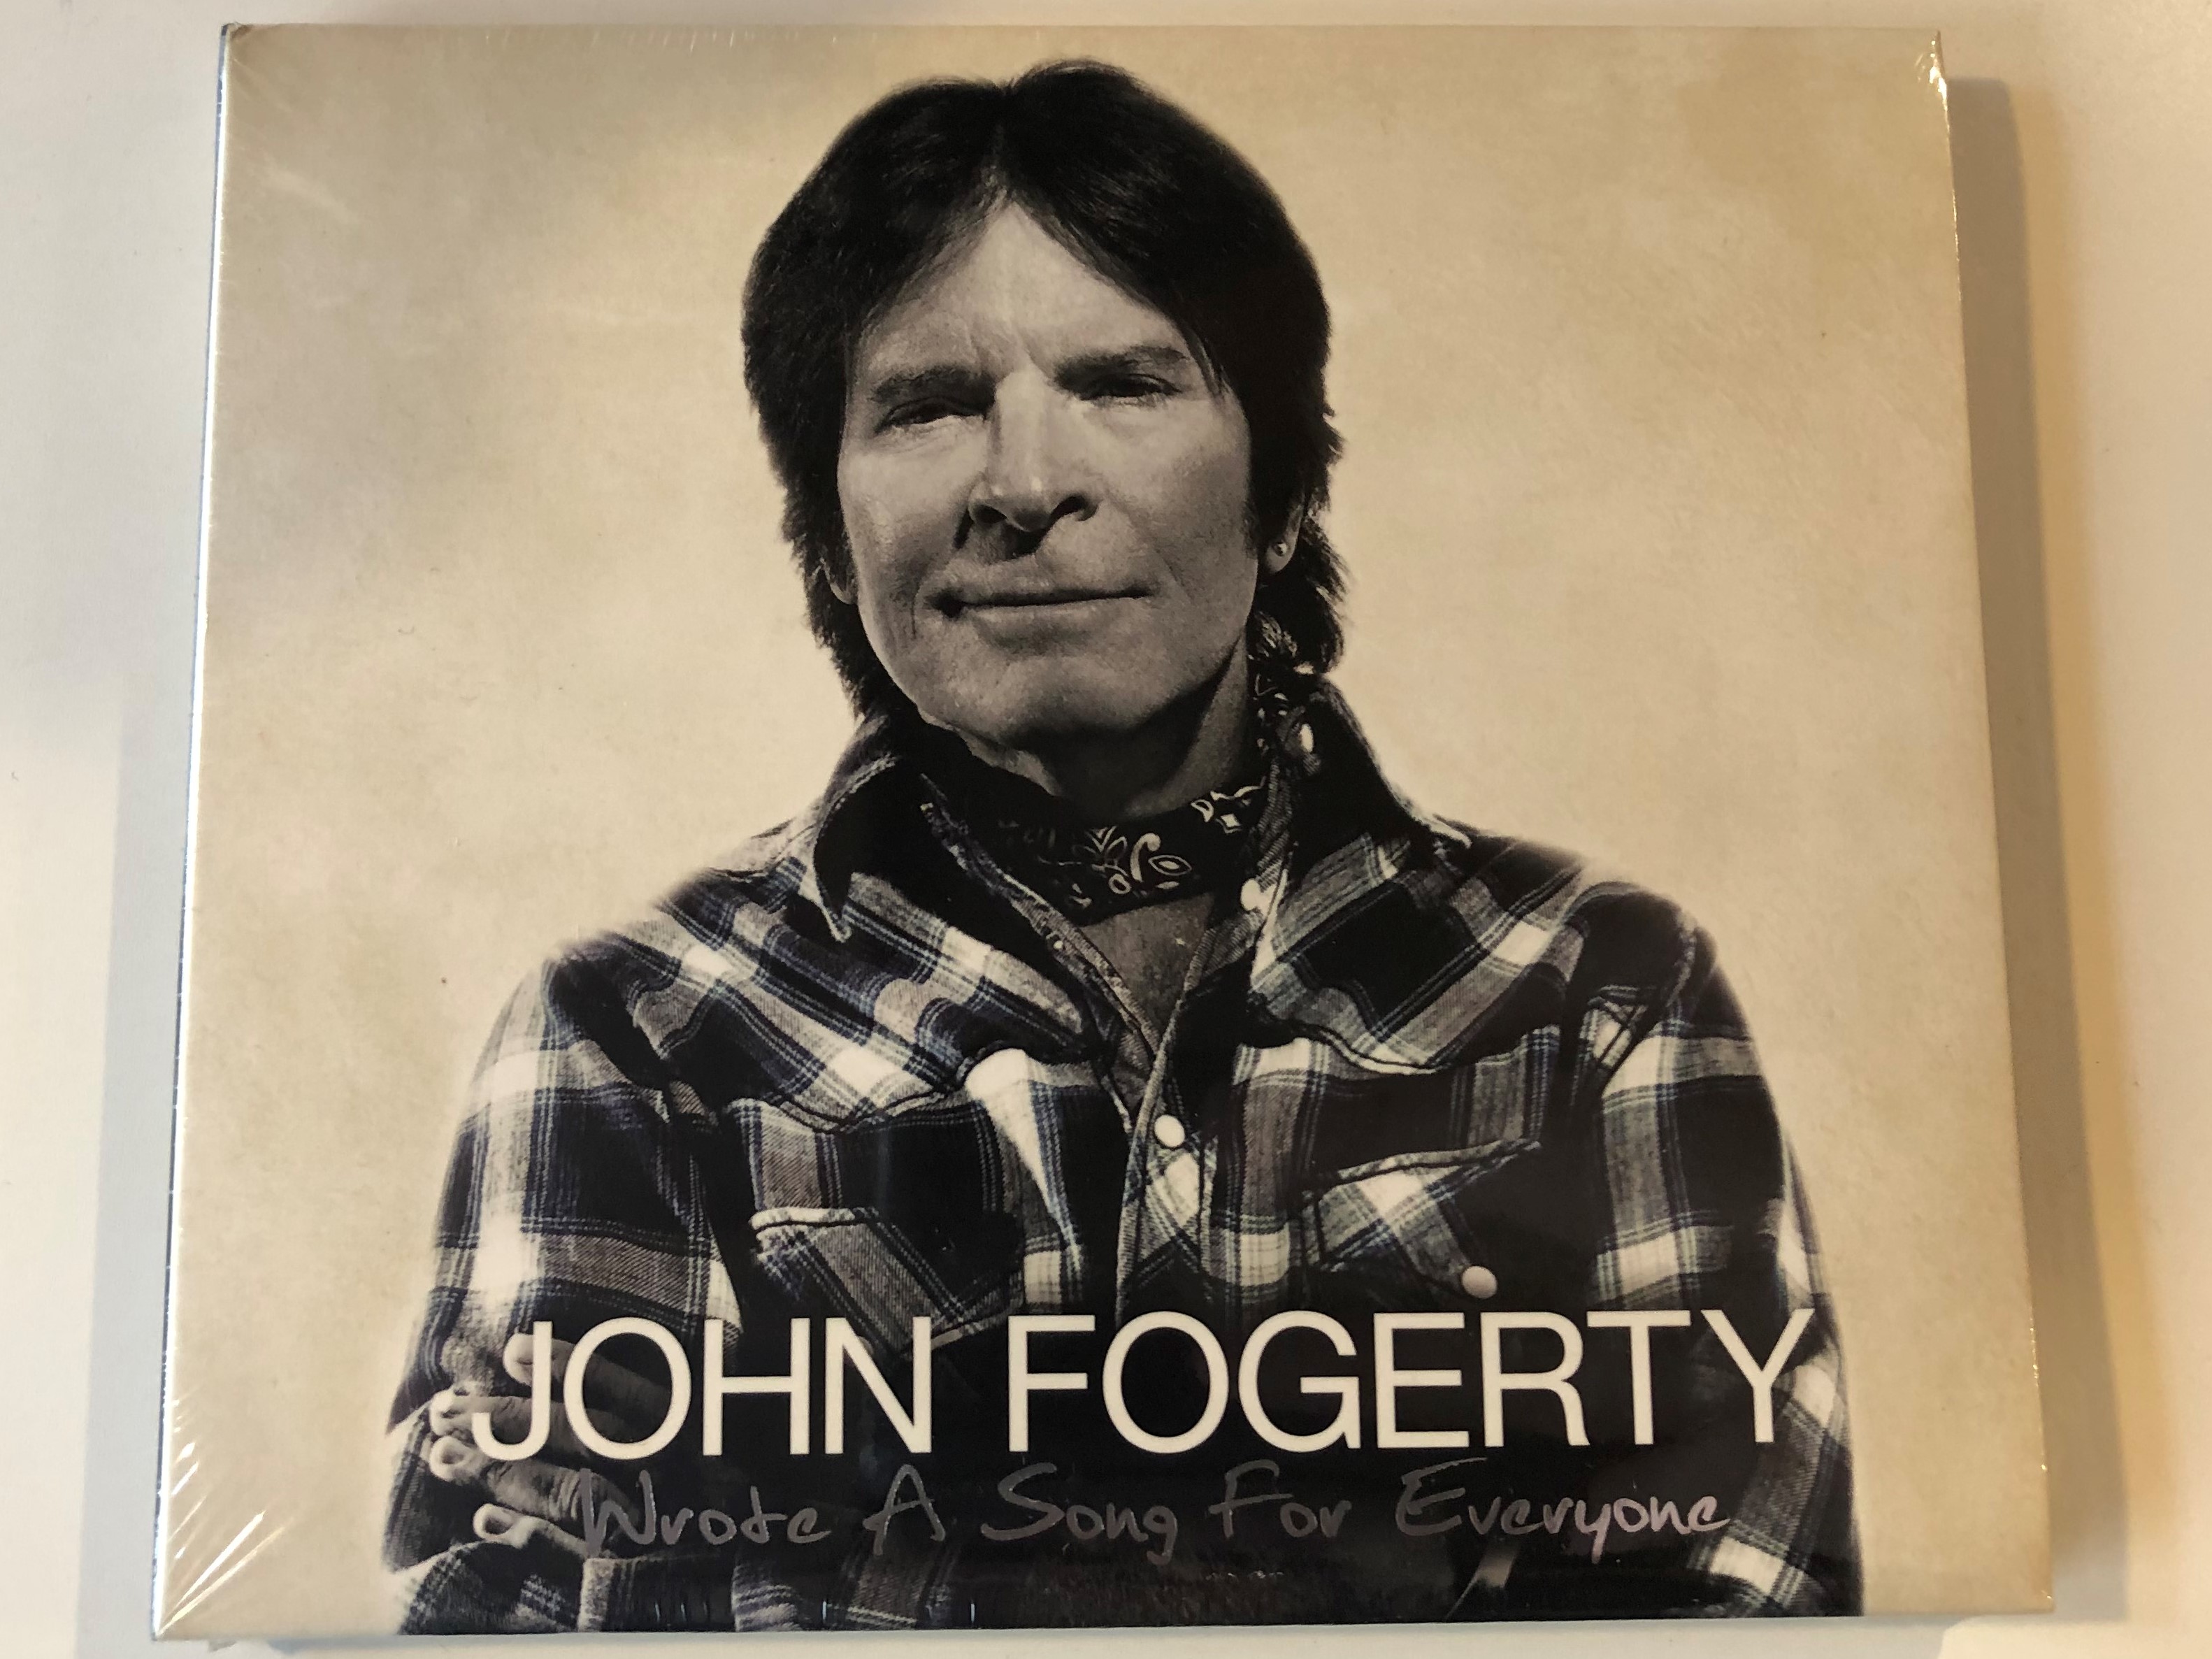 john-fogerty-wrote-a-song-for-everyone-vanguard-audio-cd-2013-88765487152-1-.jpg